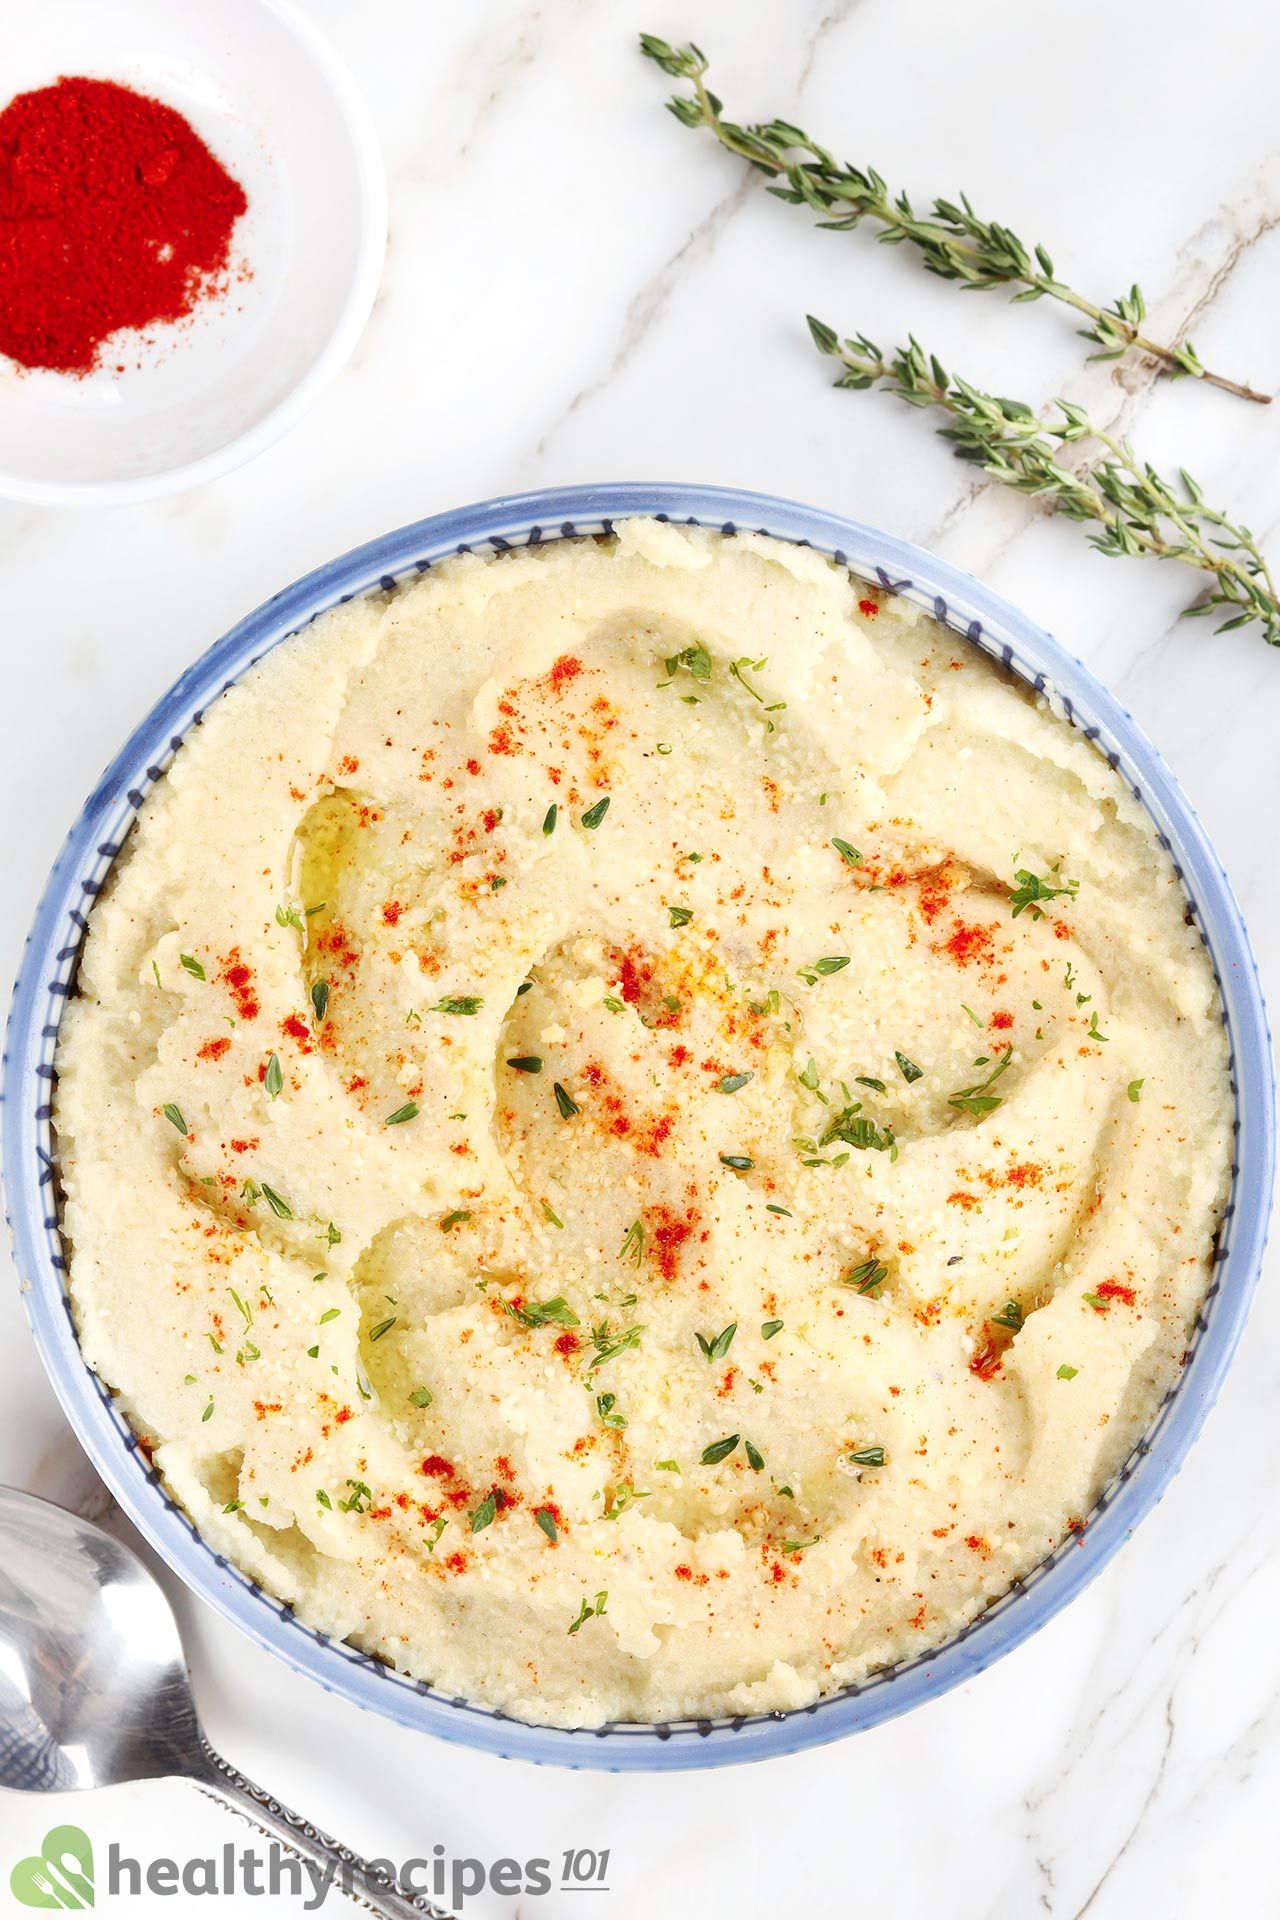 this recipe vs mashed potatoes